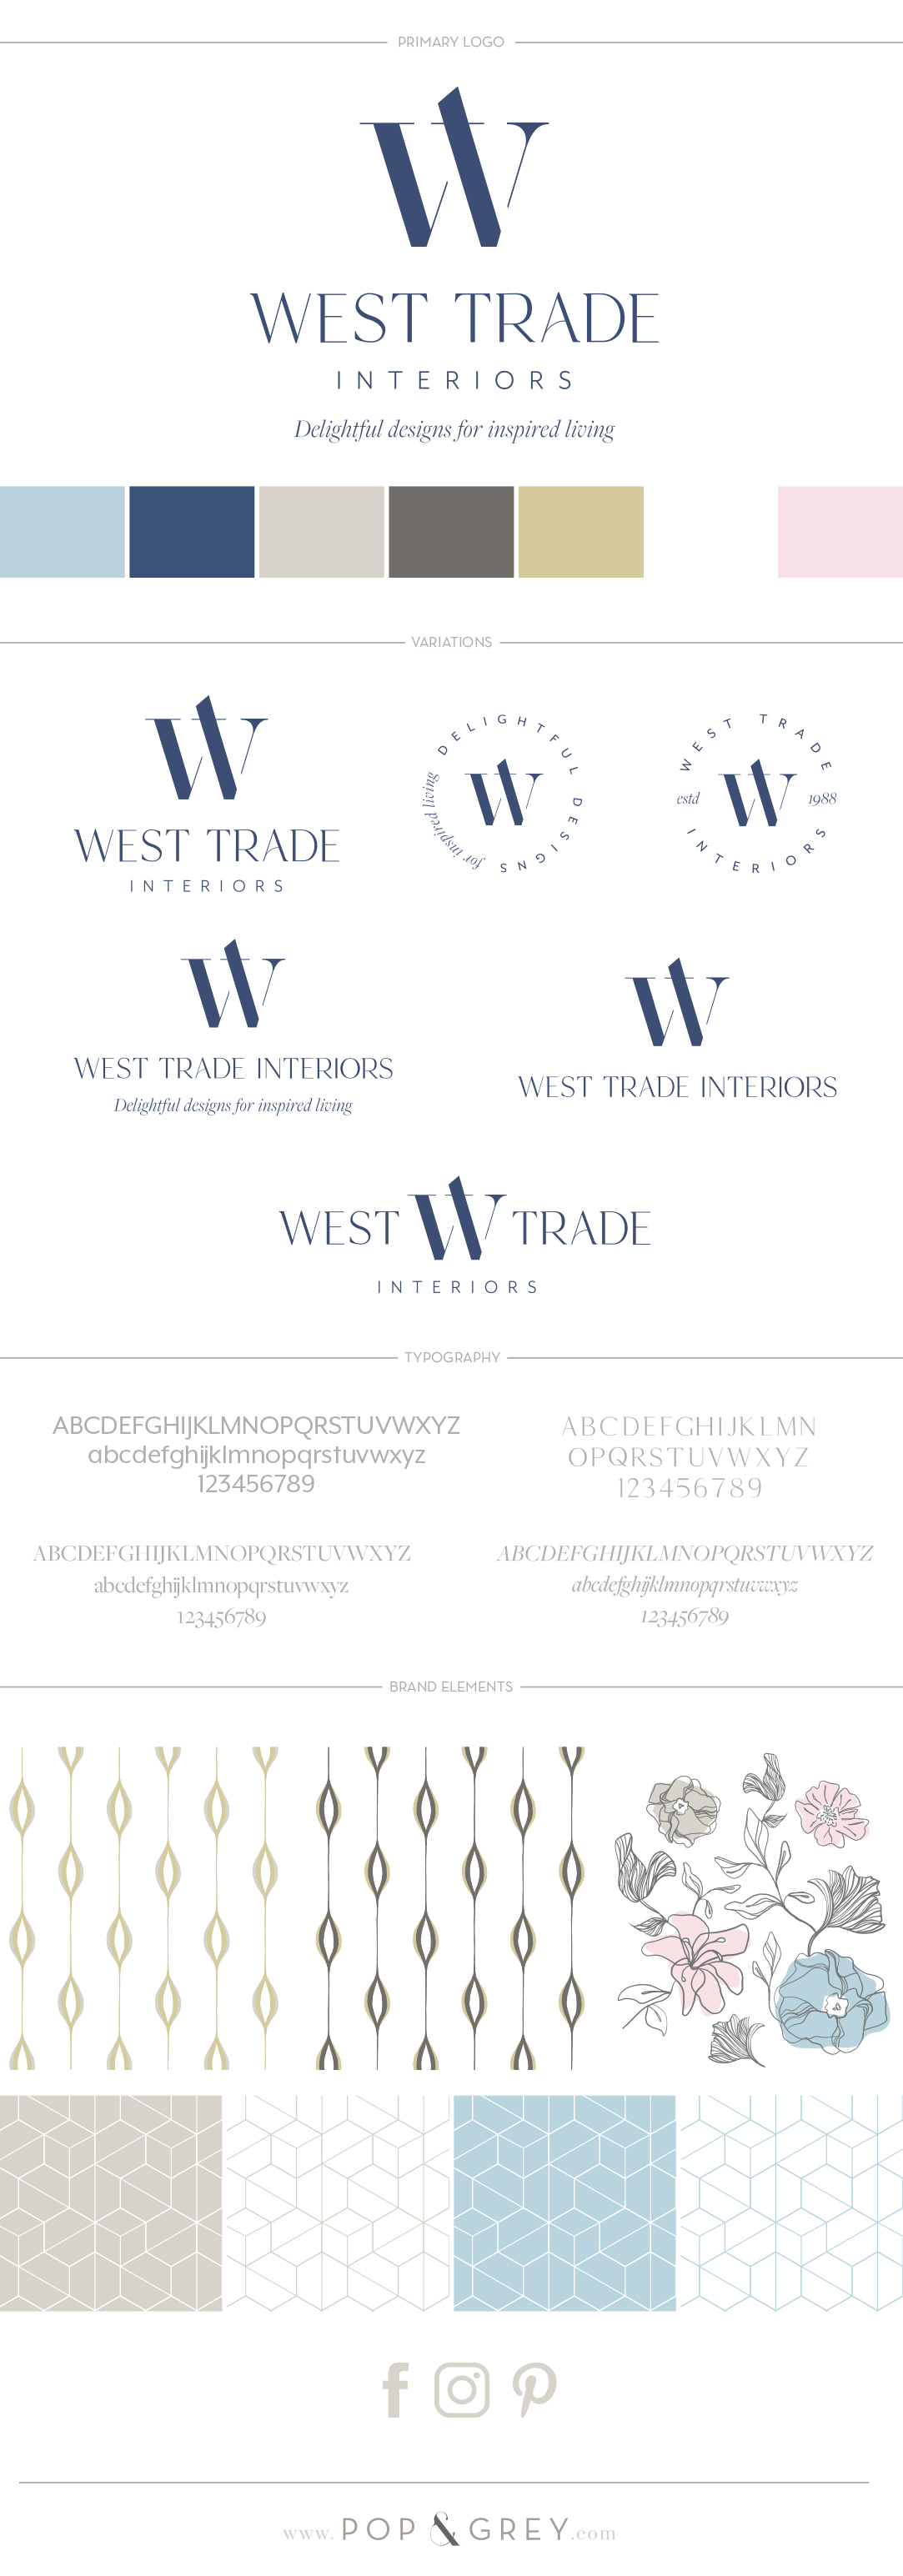 West Trade Interiors interior design brand design by Pop & Grey